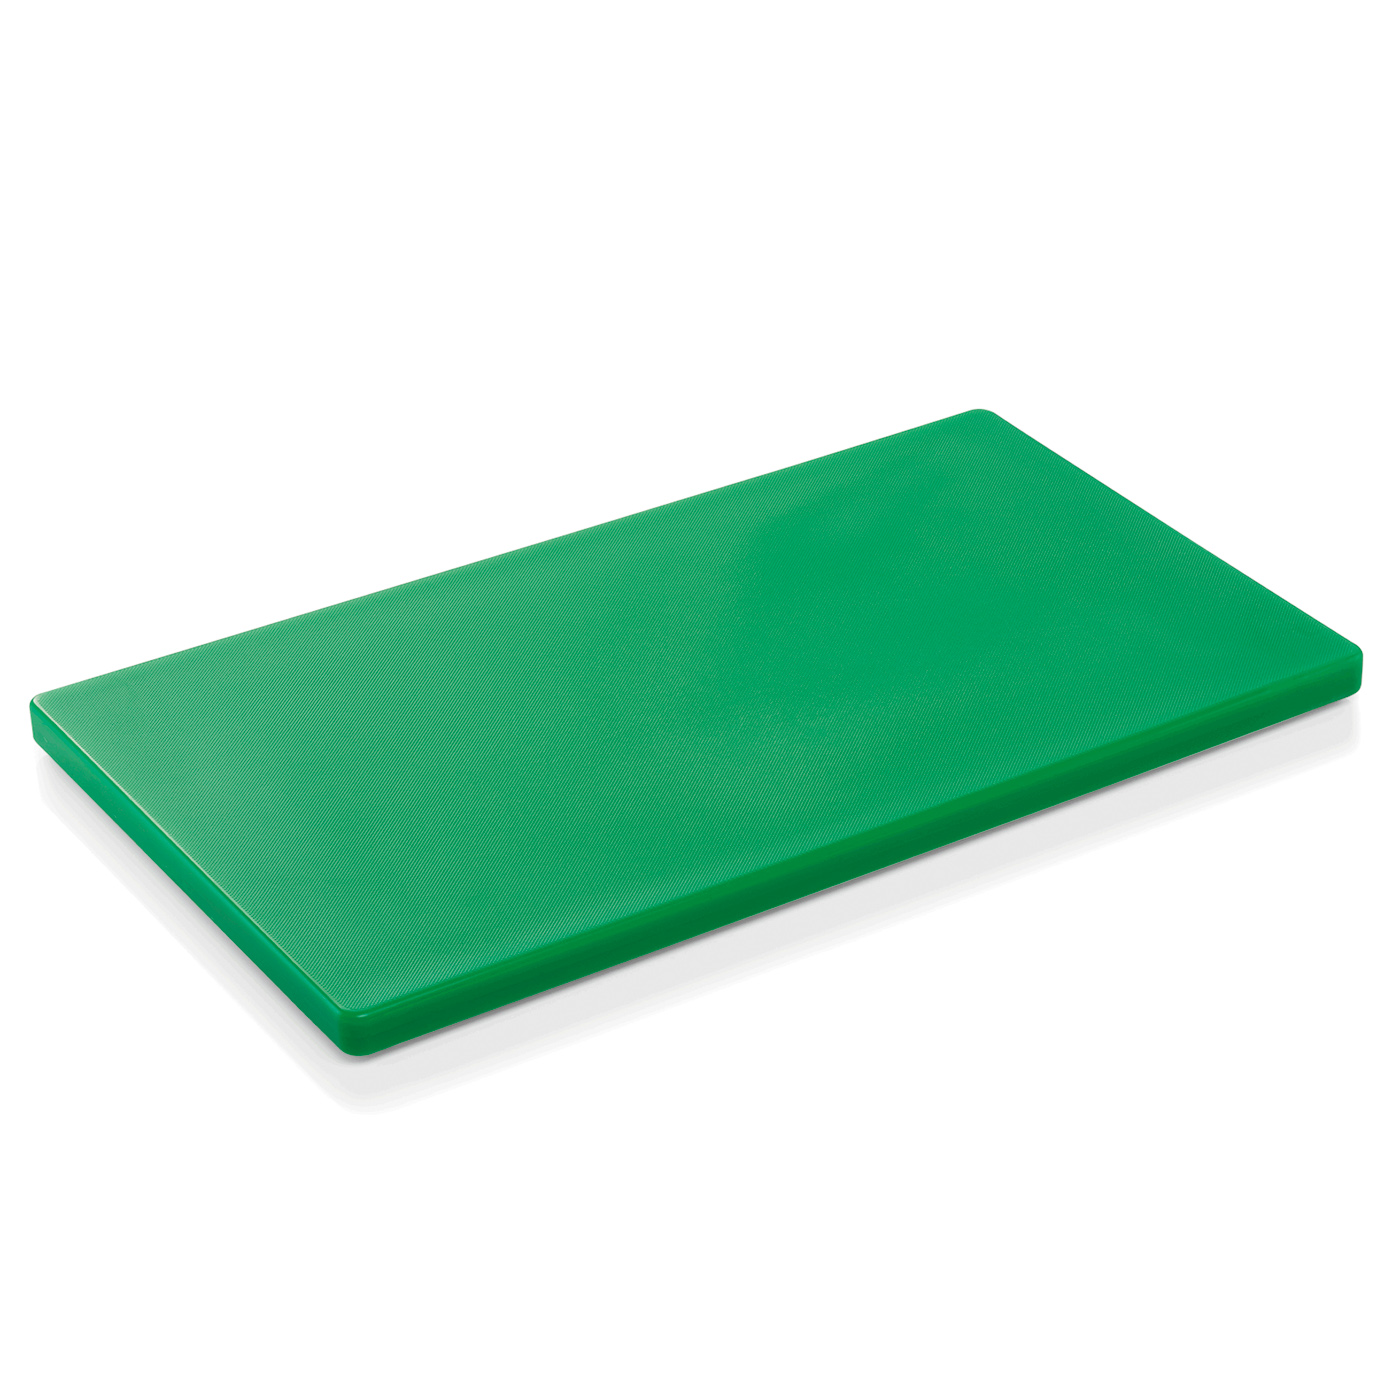 GN 1/1 HACCP Schneidbrett, Material: Polyethylen. Farbe: grün. Maße: Höhe: 20 mm